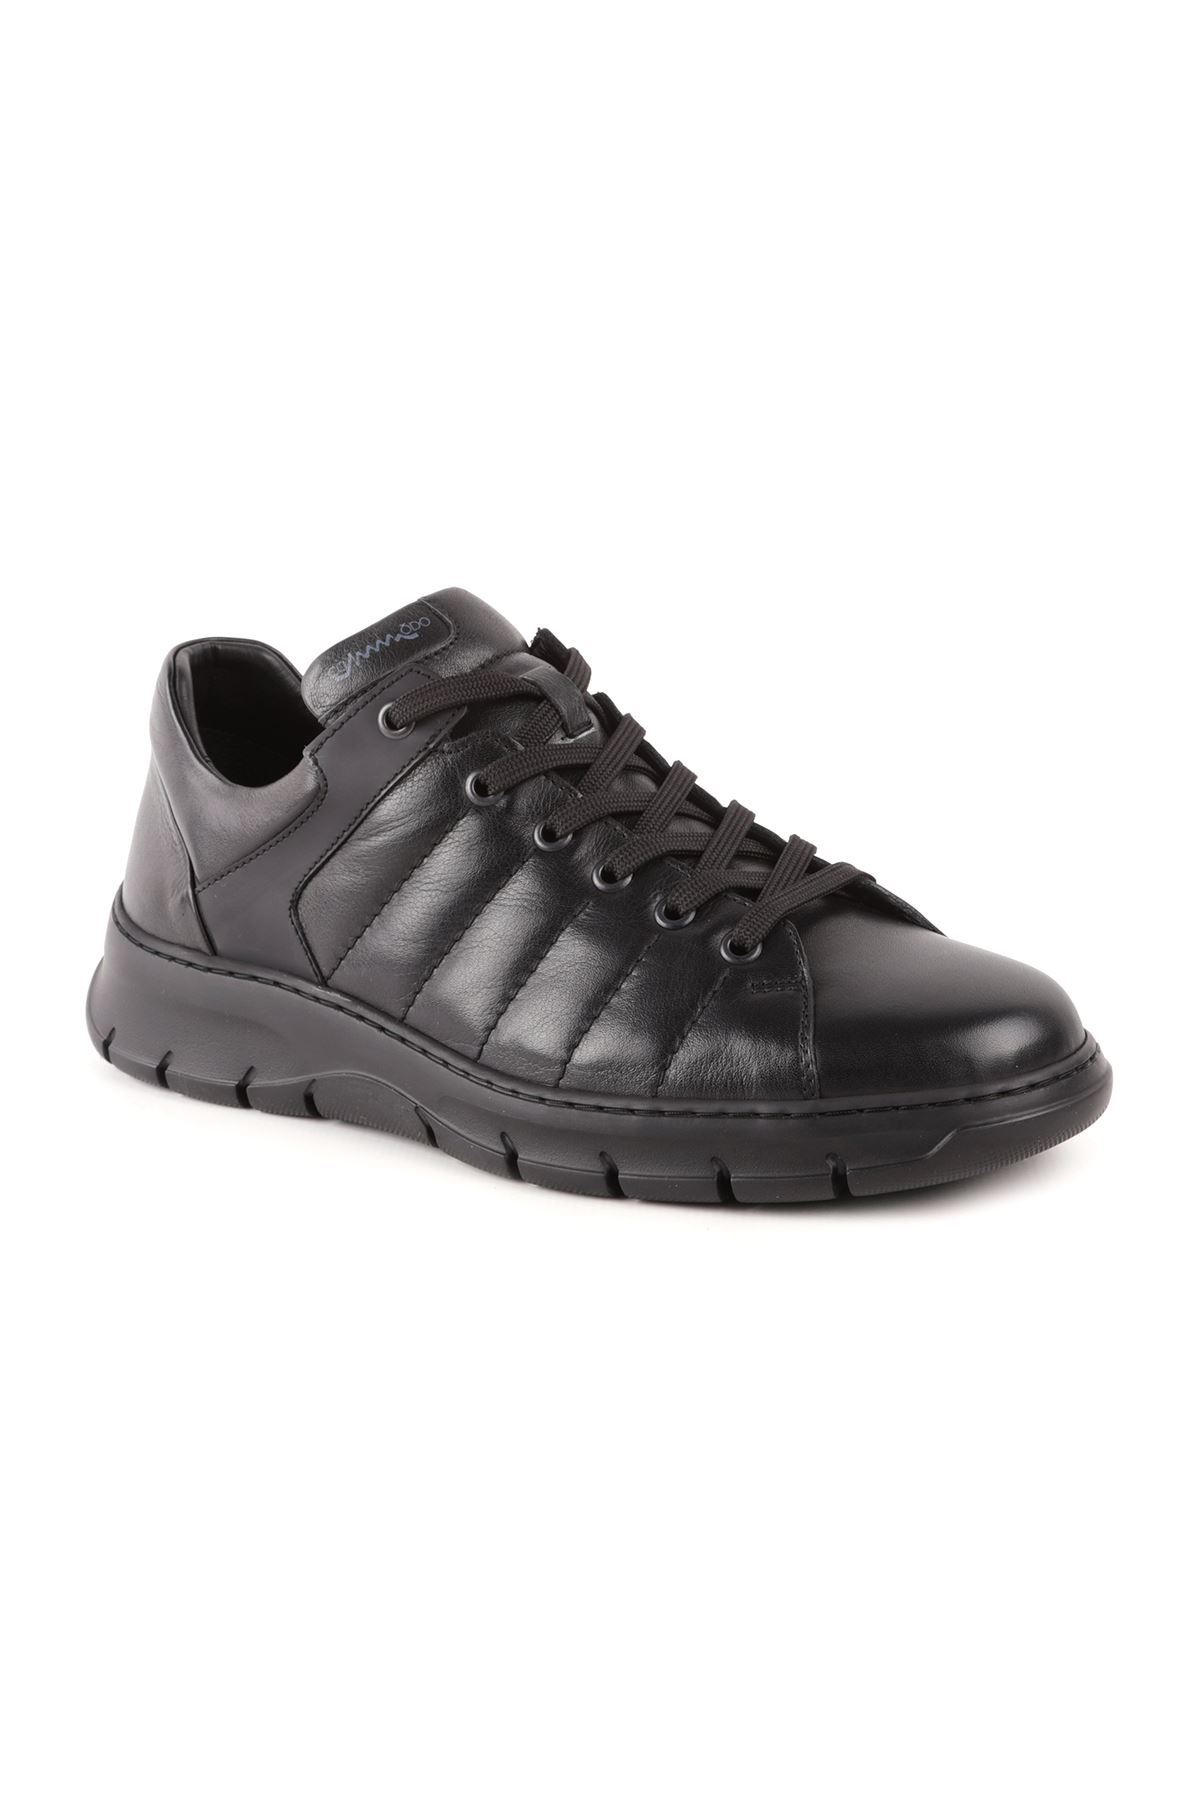 Libero L4579 Siyah Casual Erkek Deri Ayakkabı 